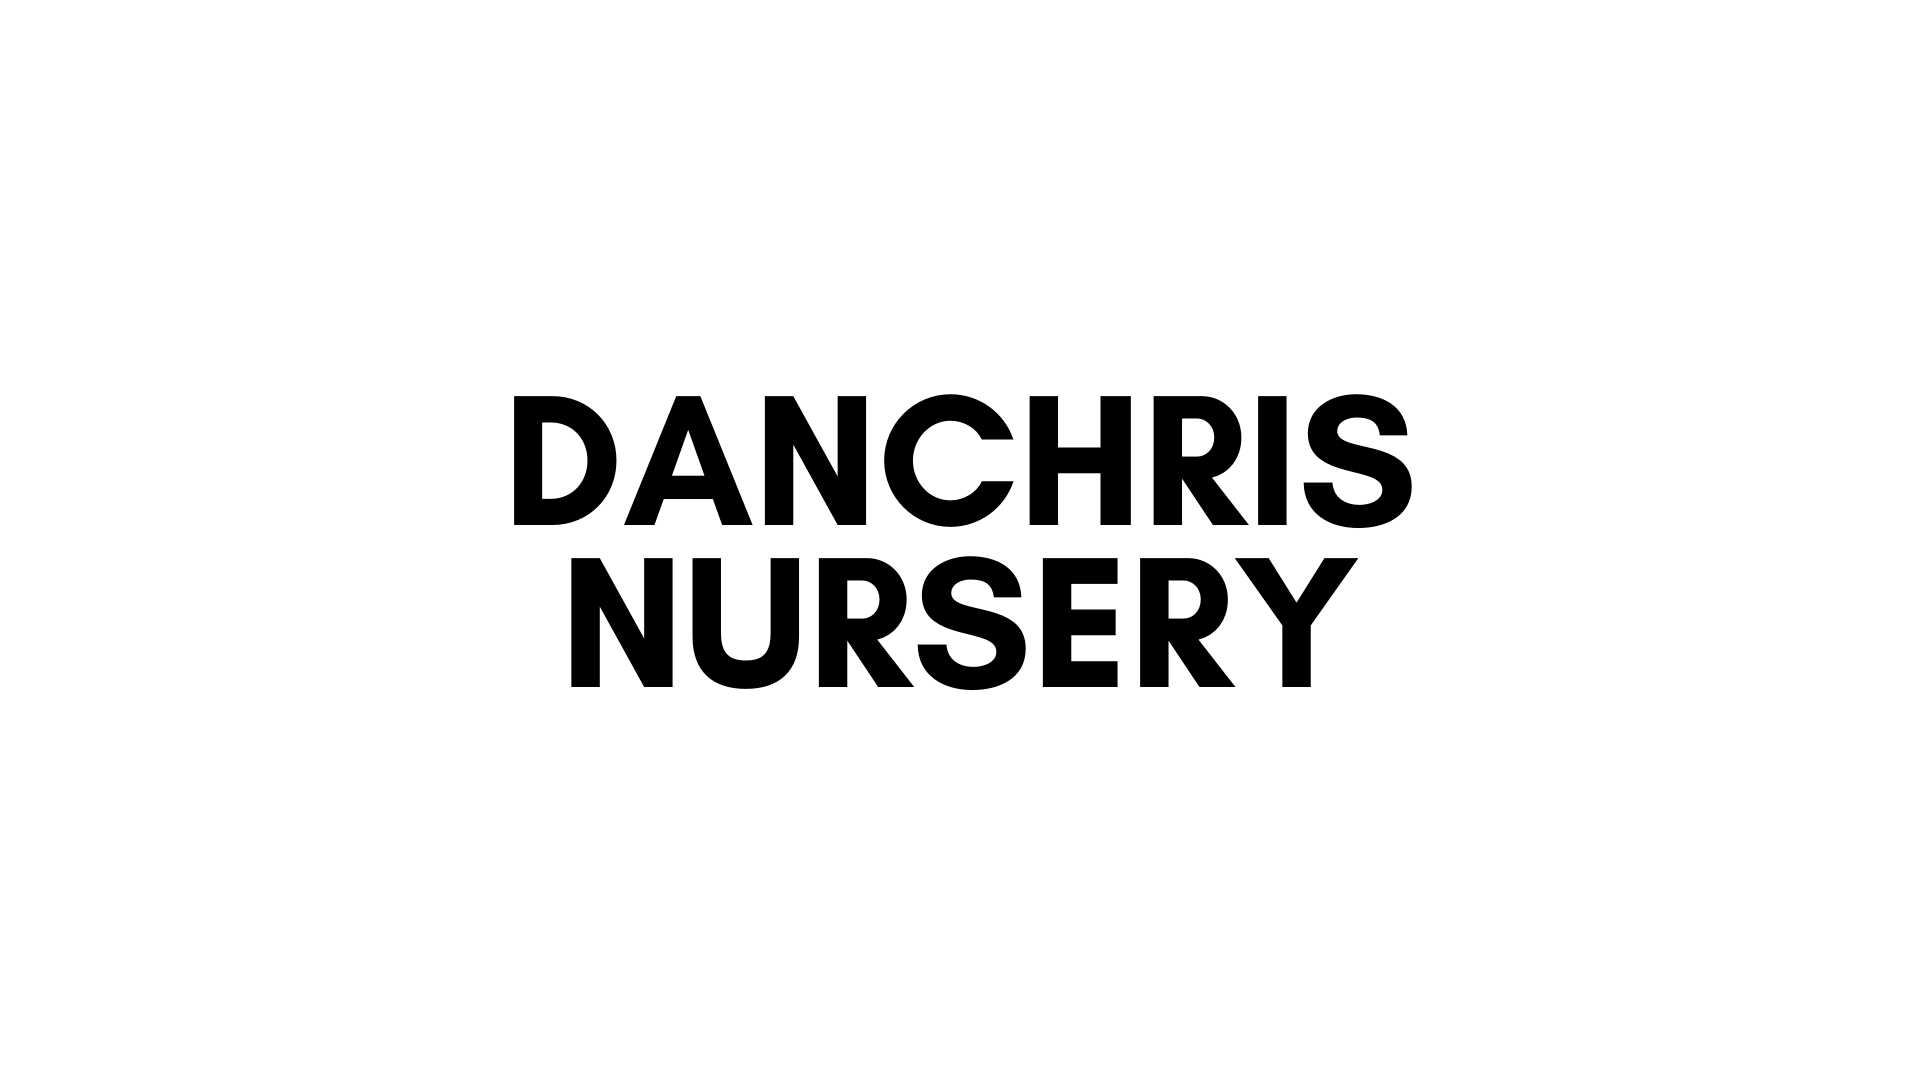 DANCHRIS NURSERY